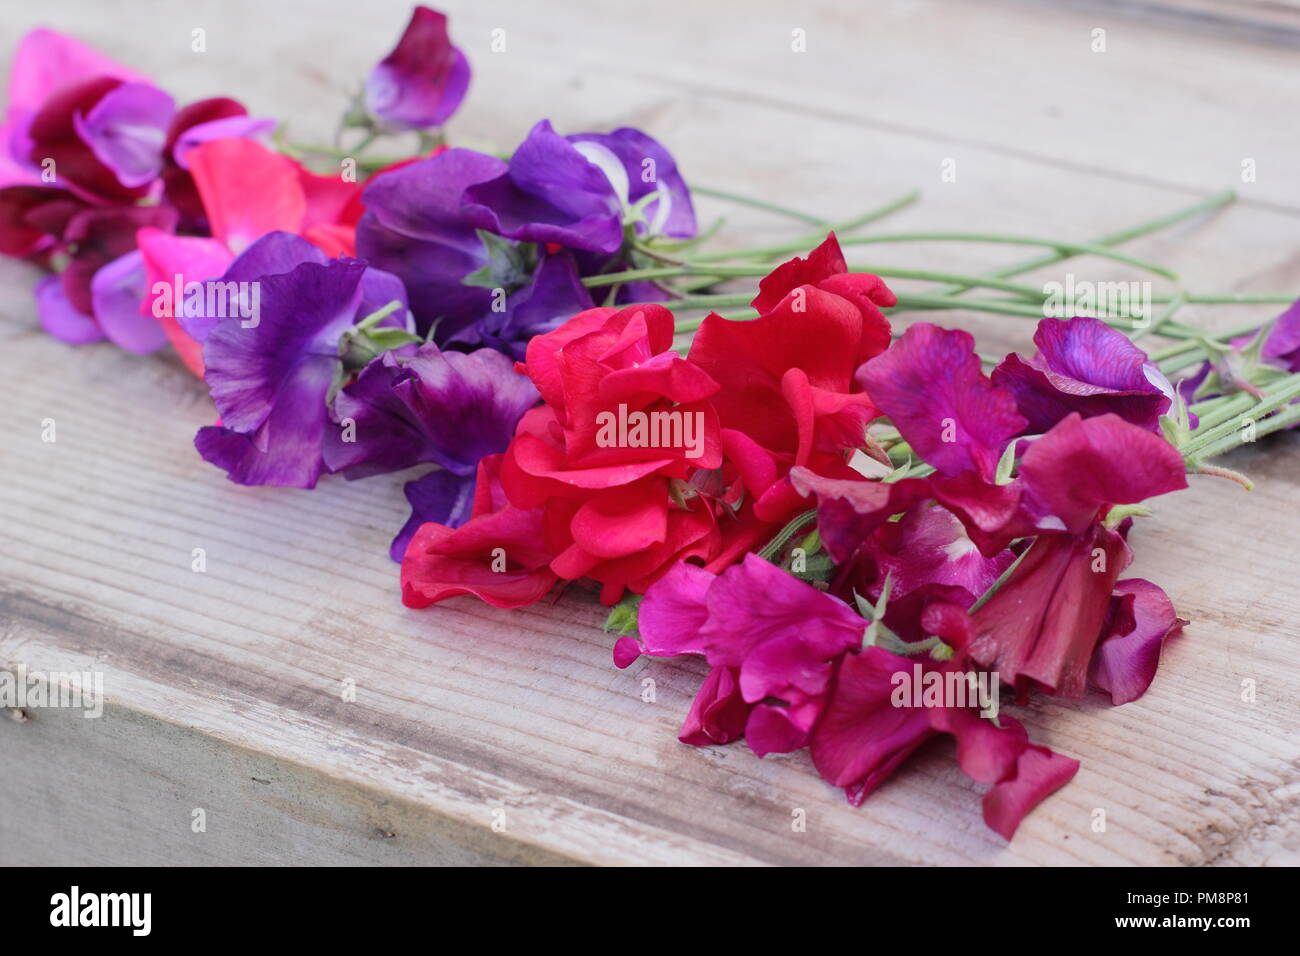 Lathyrus odoratus. Cut sweet pea flowers on wooden table, summer, UK Stock Photo